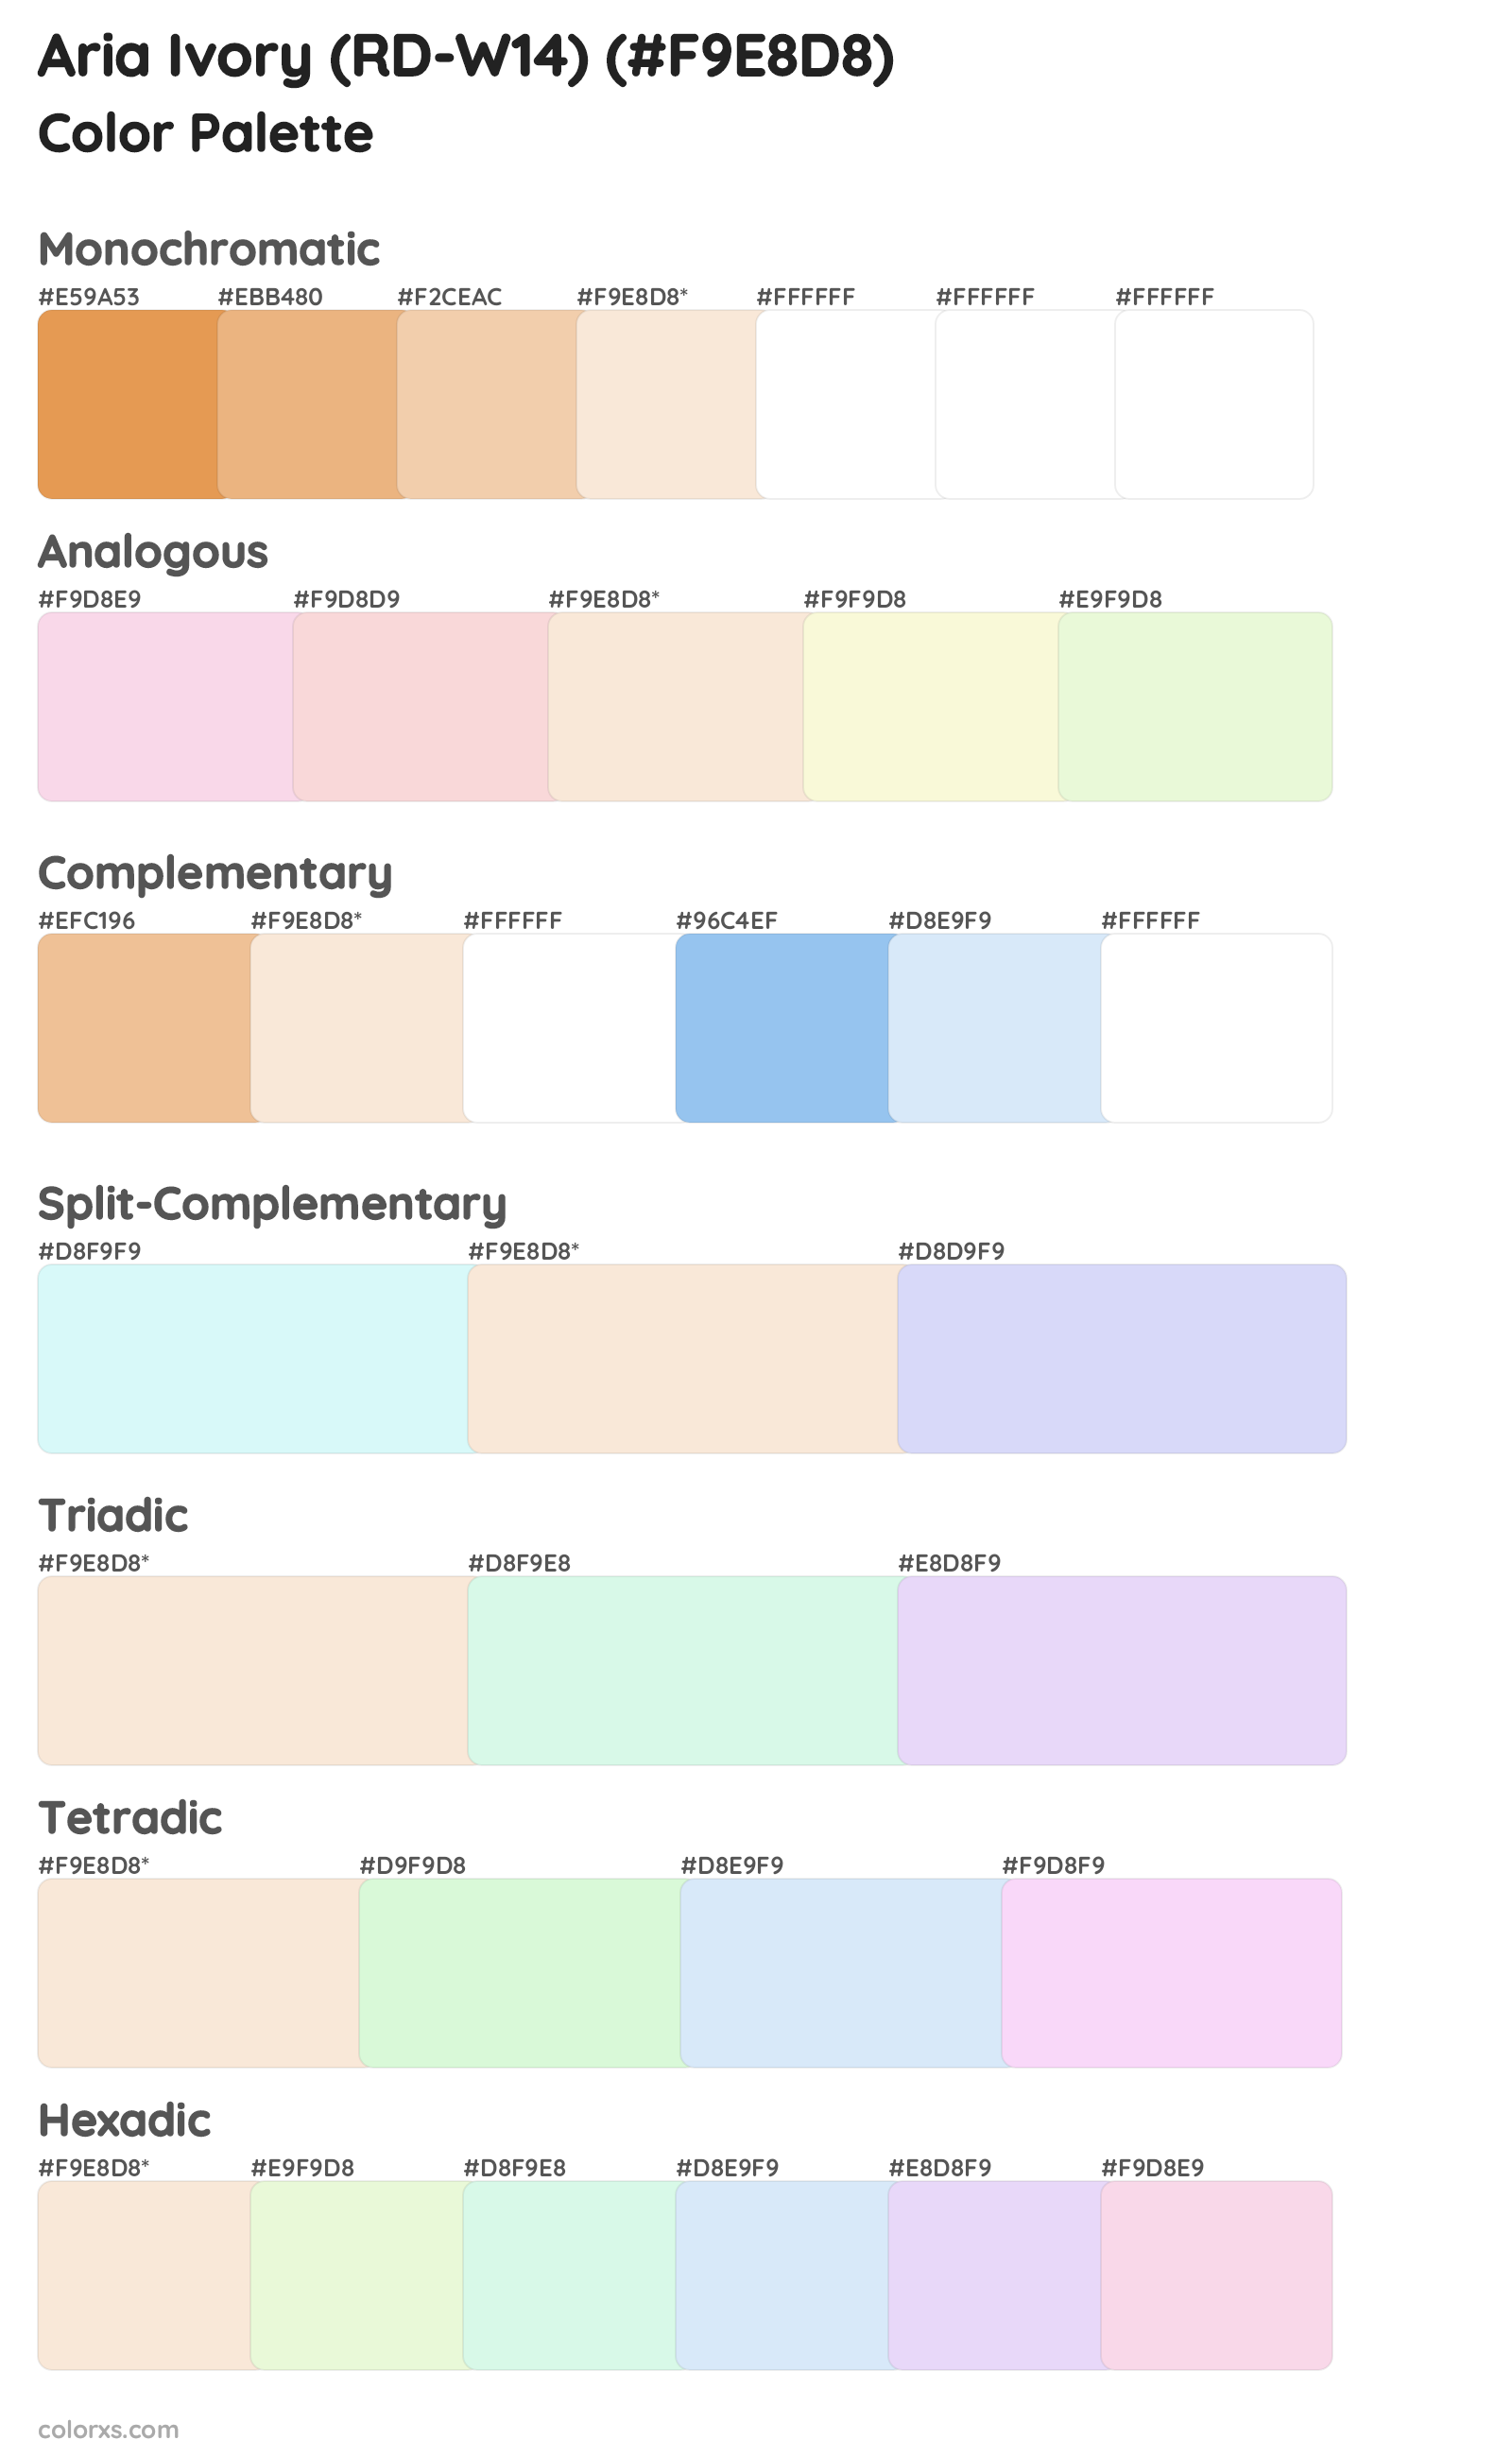 Aria Ivory (RD-W14) Color Scheme Palettes